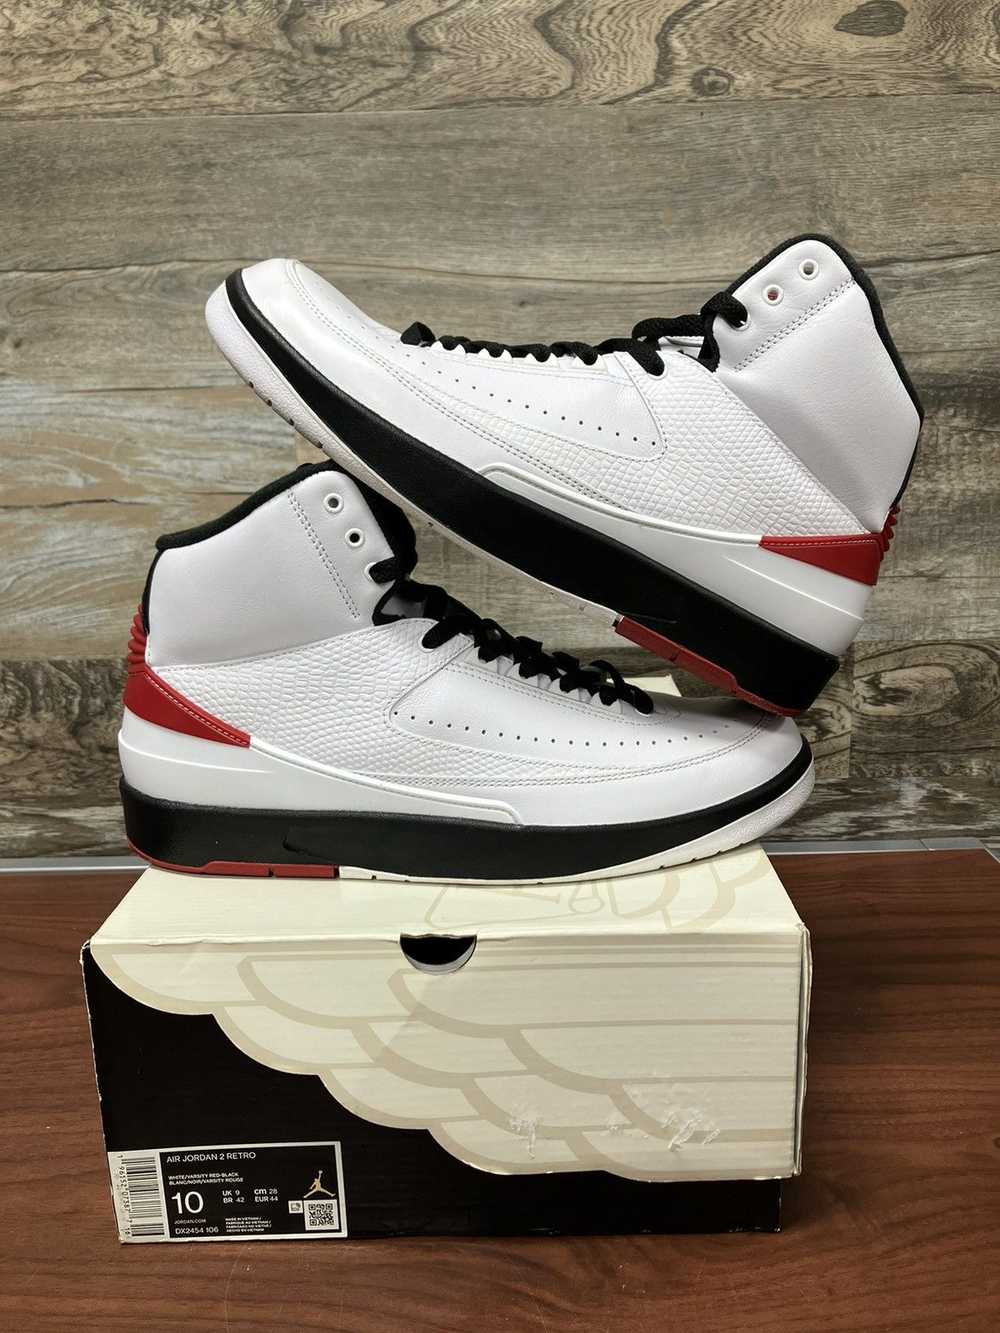 Jordan Brand Jordan 2 Retro Chicago - image 1